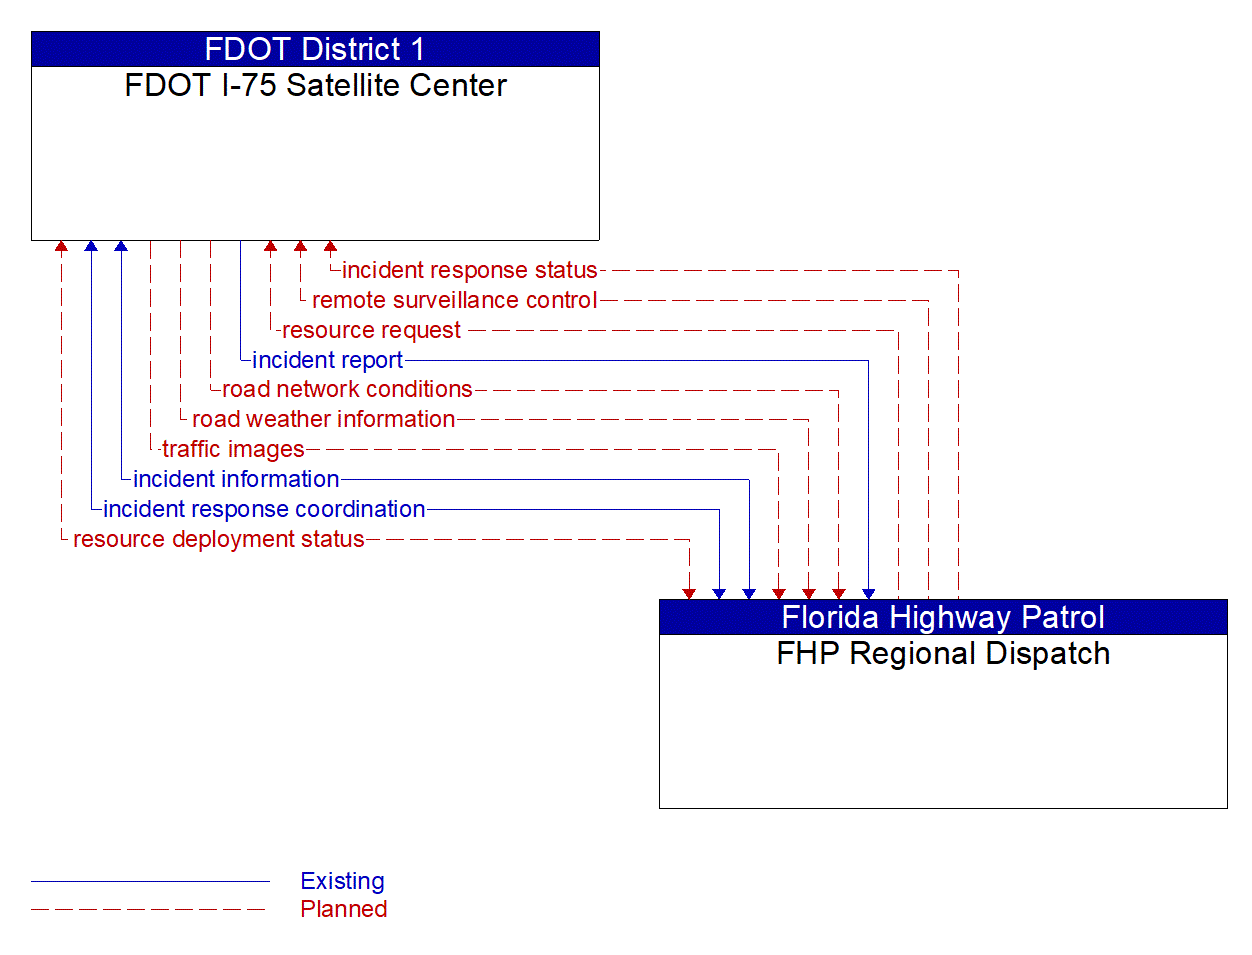 Architecture Flow Diagram: FHP Regional Dispatch <--> FDOT I-75 Satellite Center